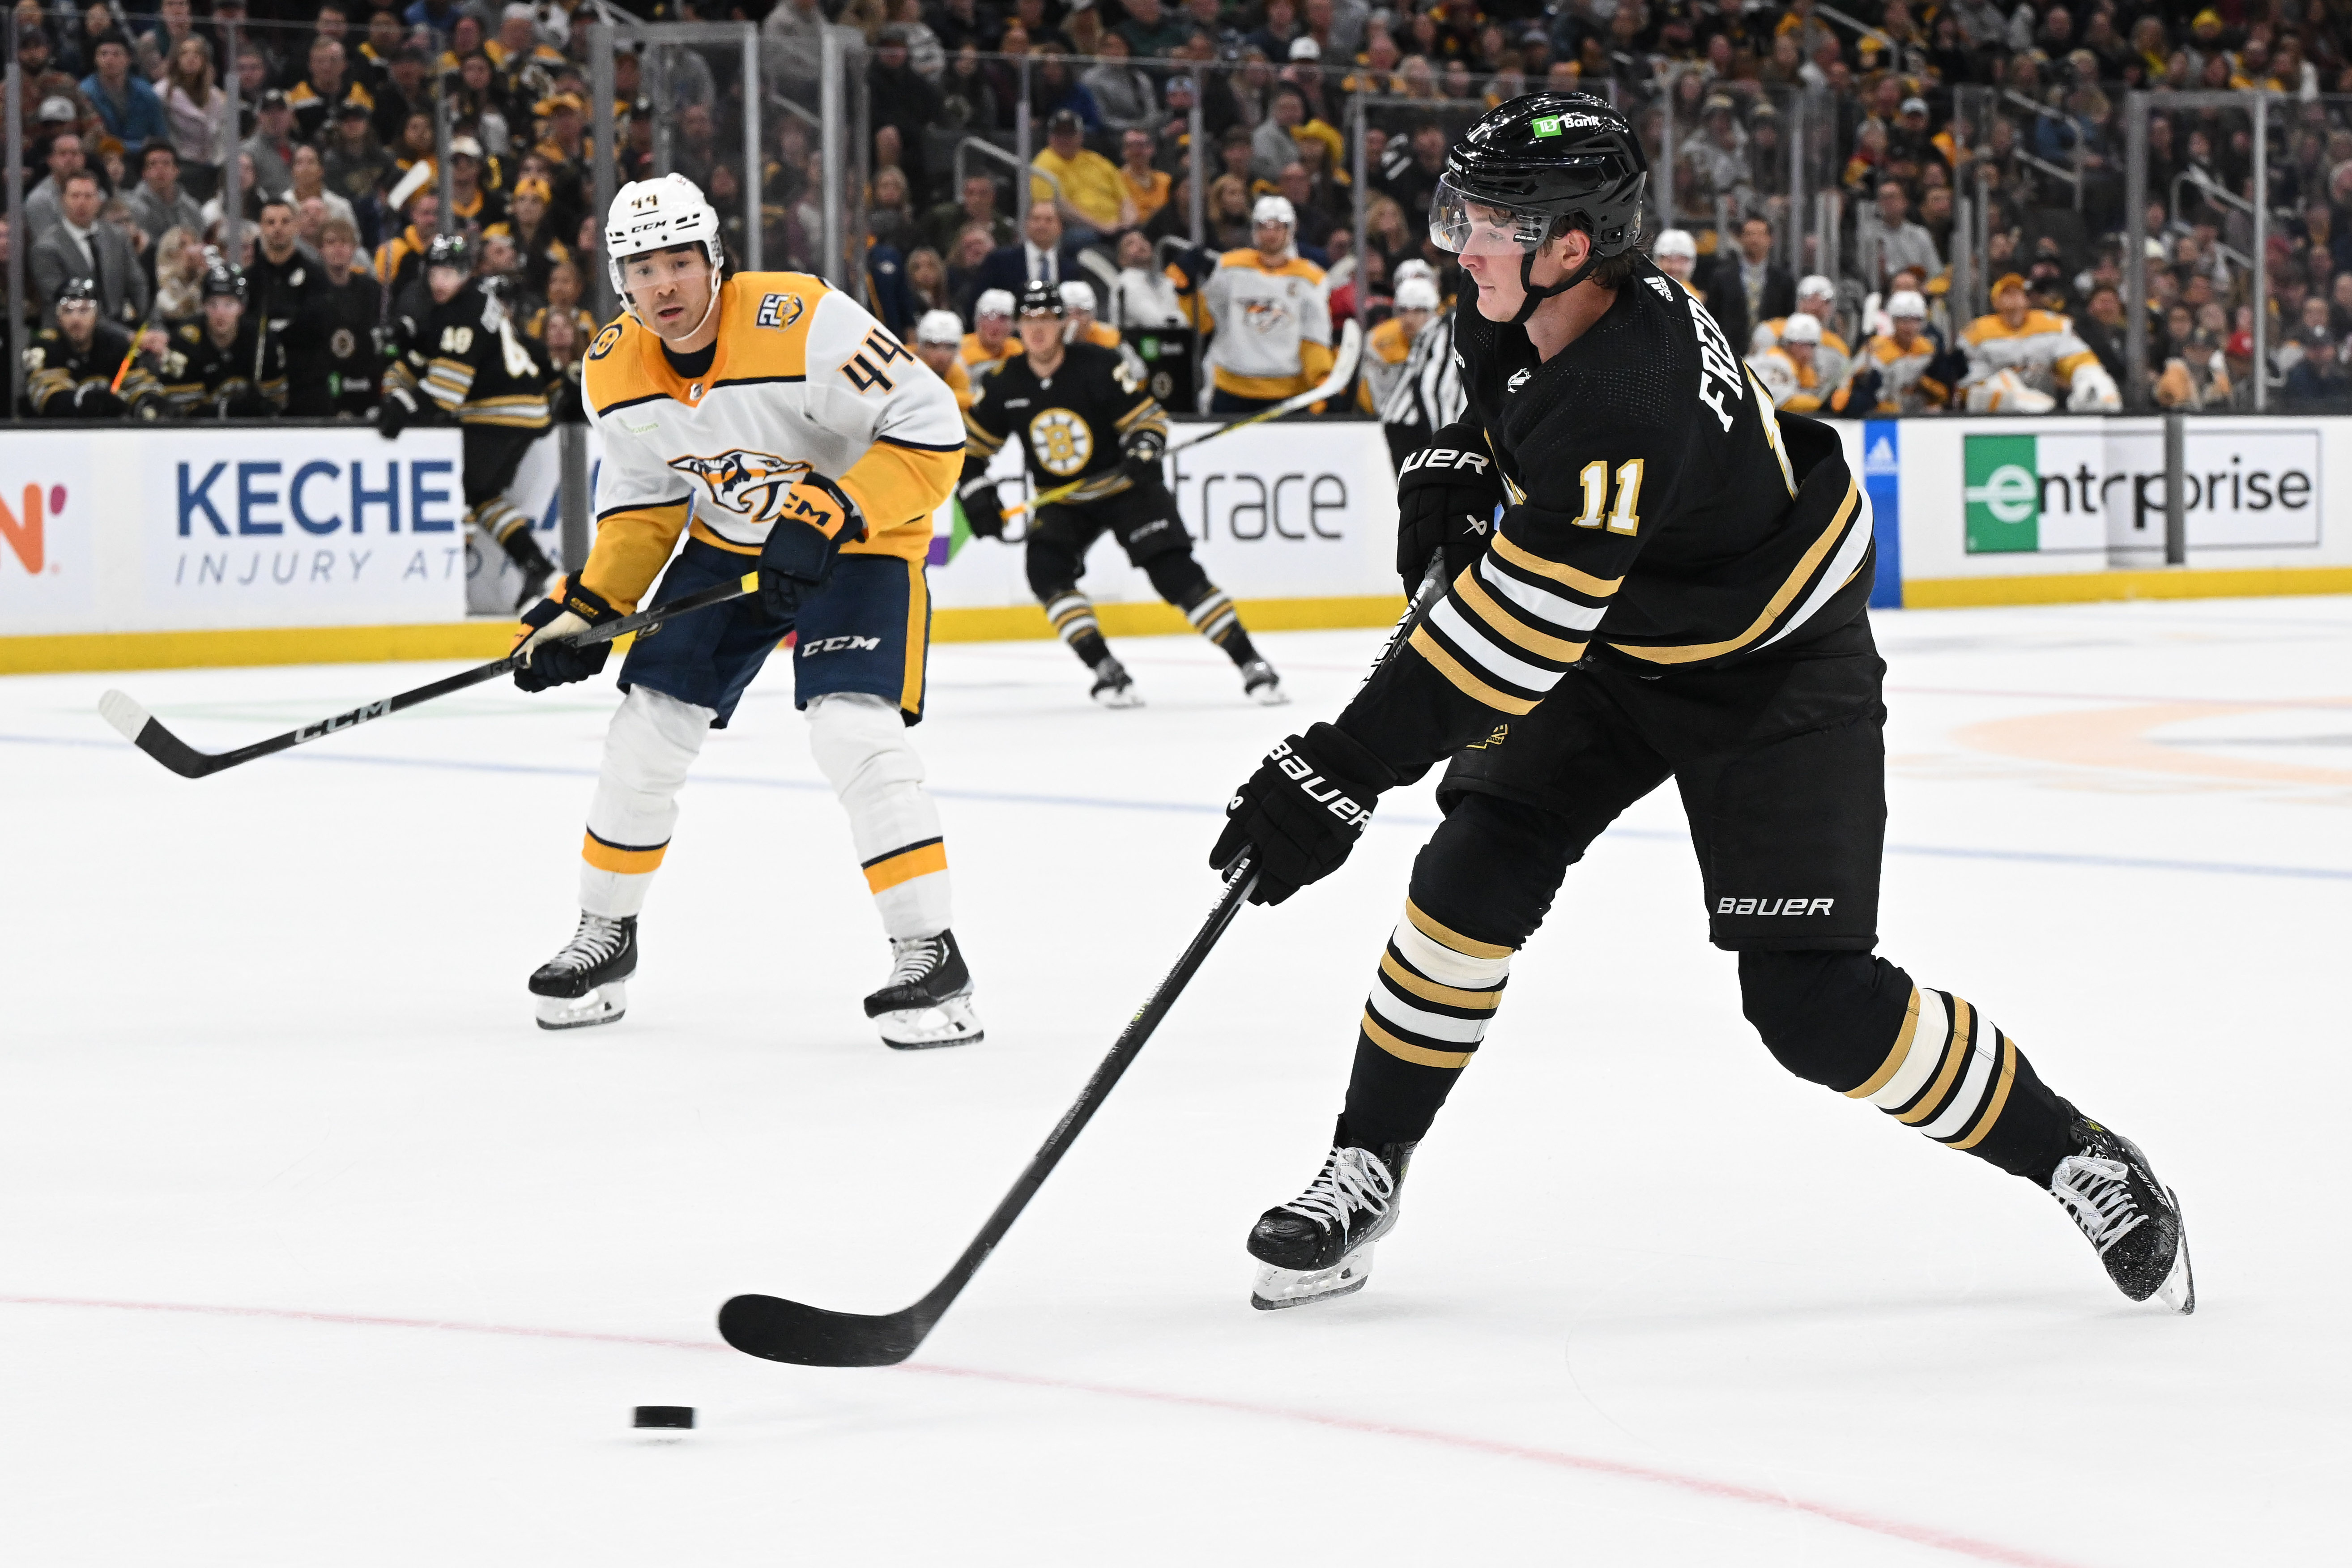 James van Riemsdyk scores twice, leads Bruins past Predators - The